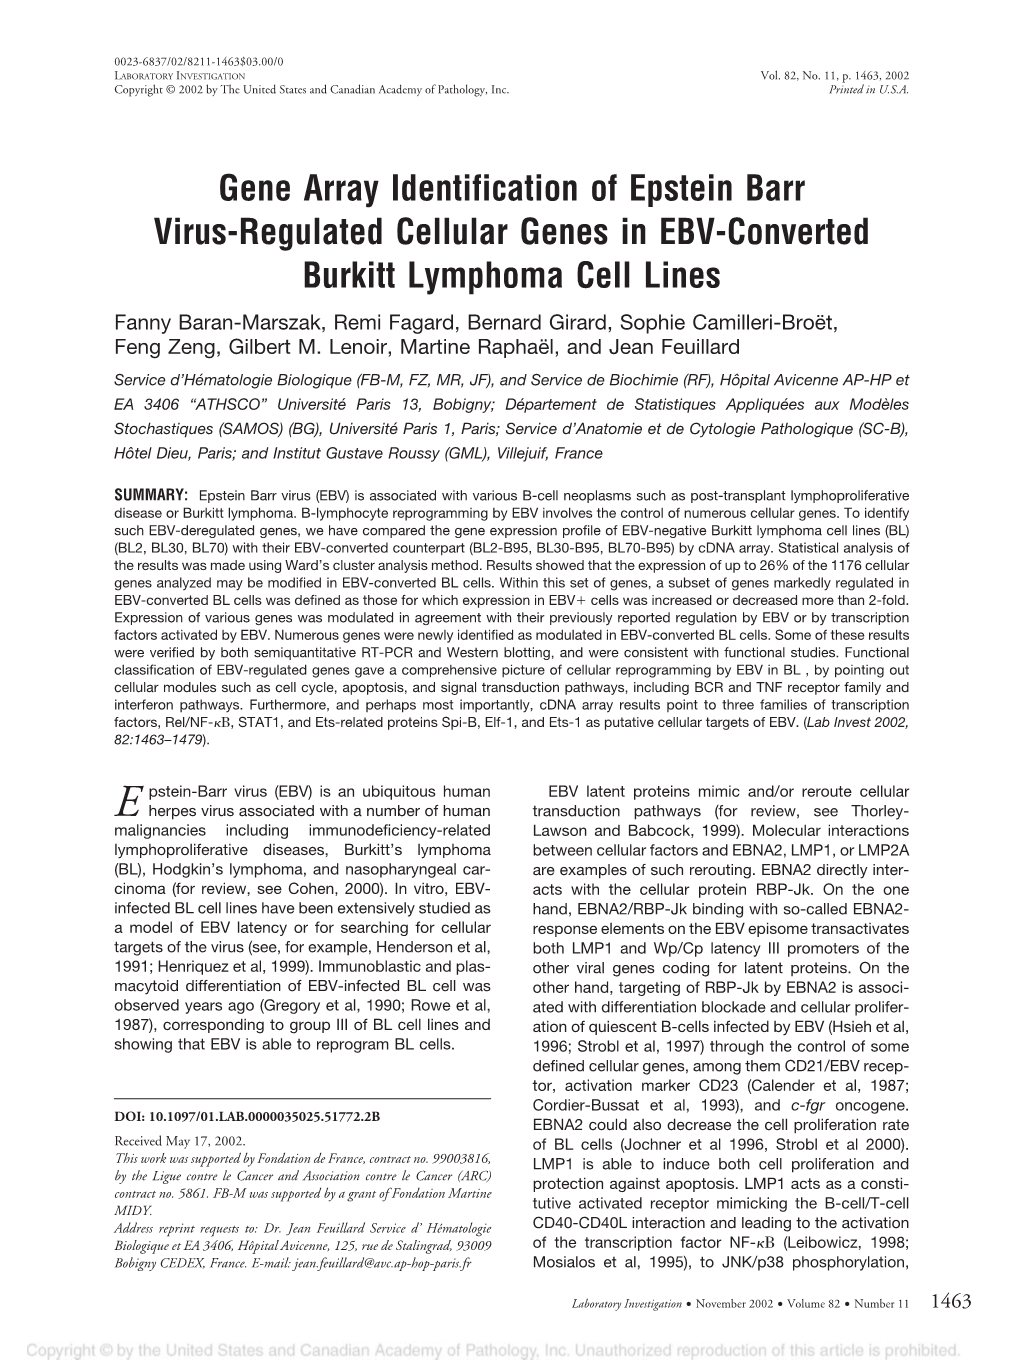 Gene Array Identification of Epstein Barr Virus-Regulated Cellular Genes in EBV-Converted Burkitt Lymphoma Cell Lines